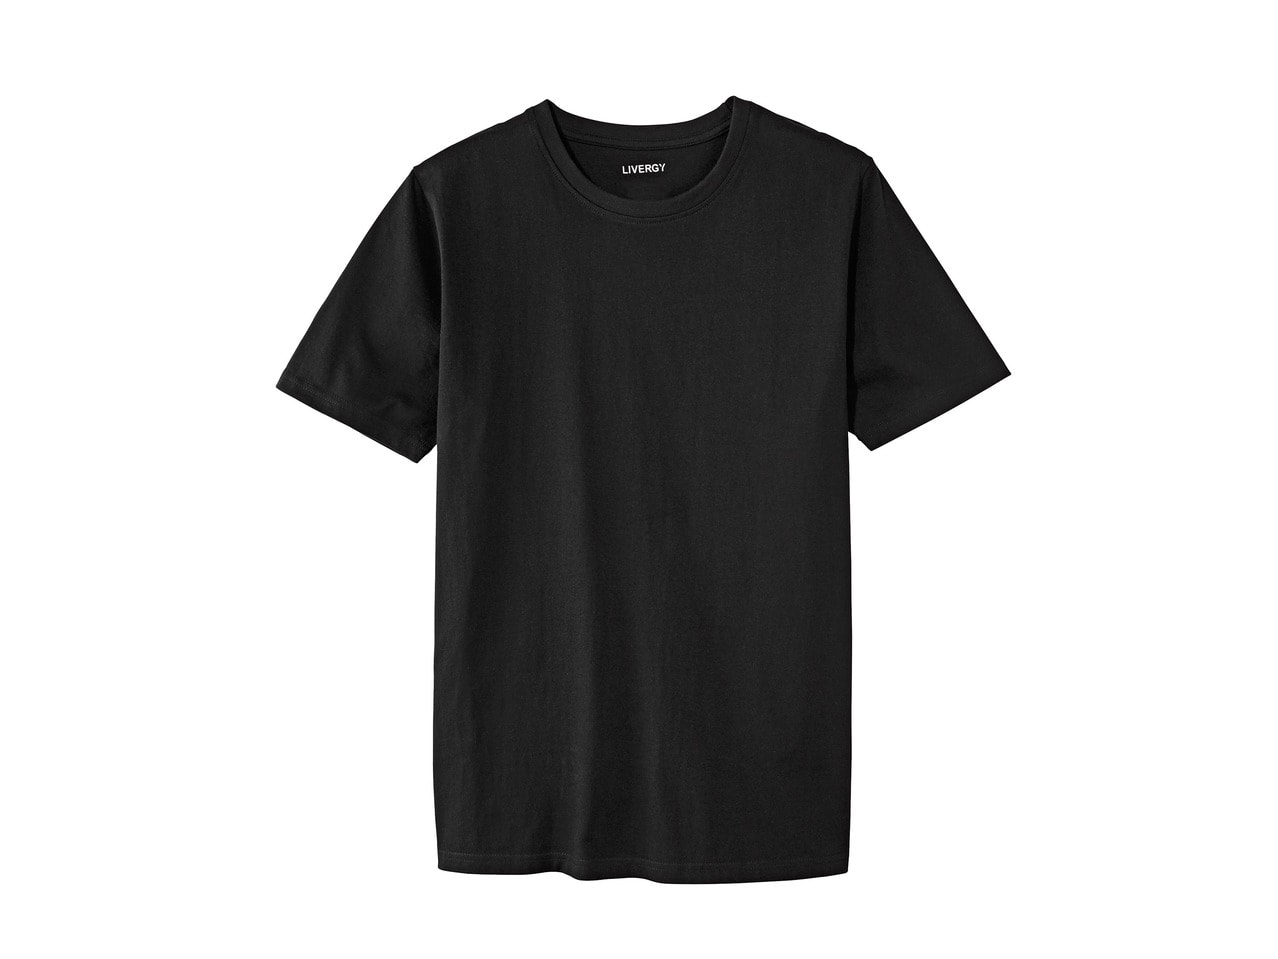 Livergy Men's T-Shirts1